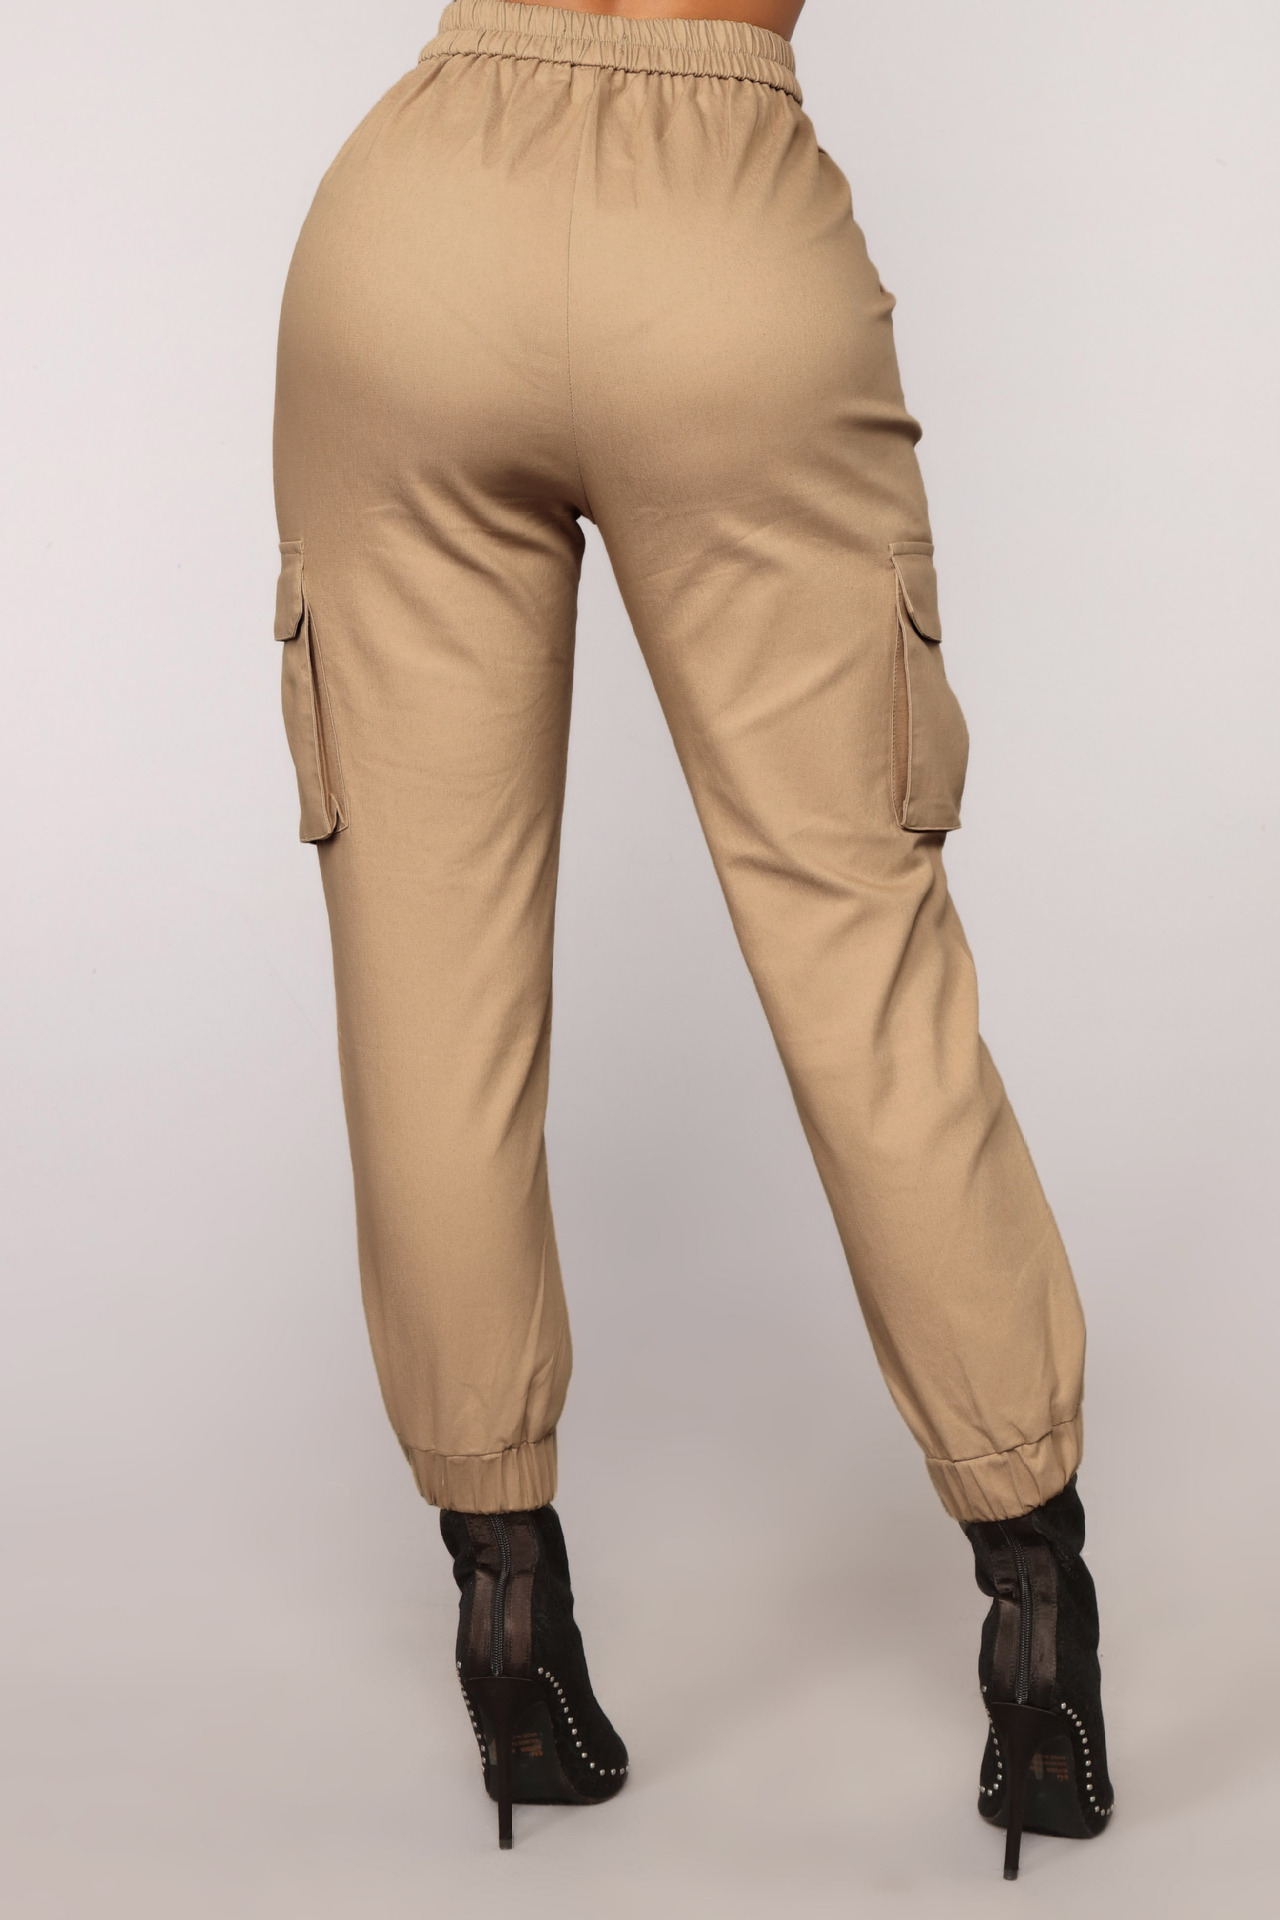 Unlimon New Pop Fashion Camouflage Elastic Waist Tricolor Harlan Women's Casual Pants D01512